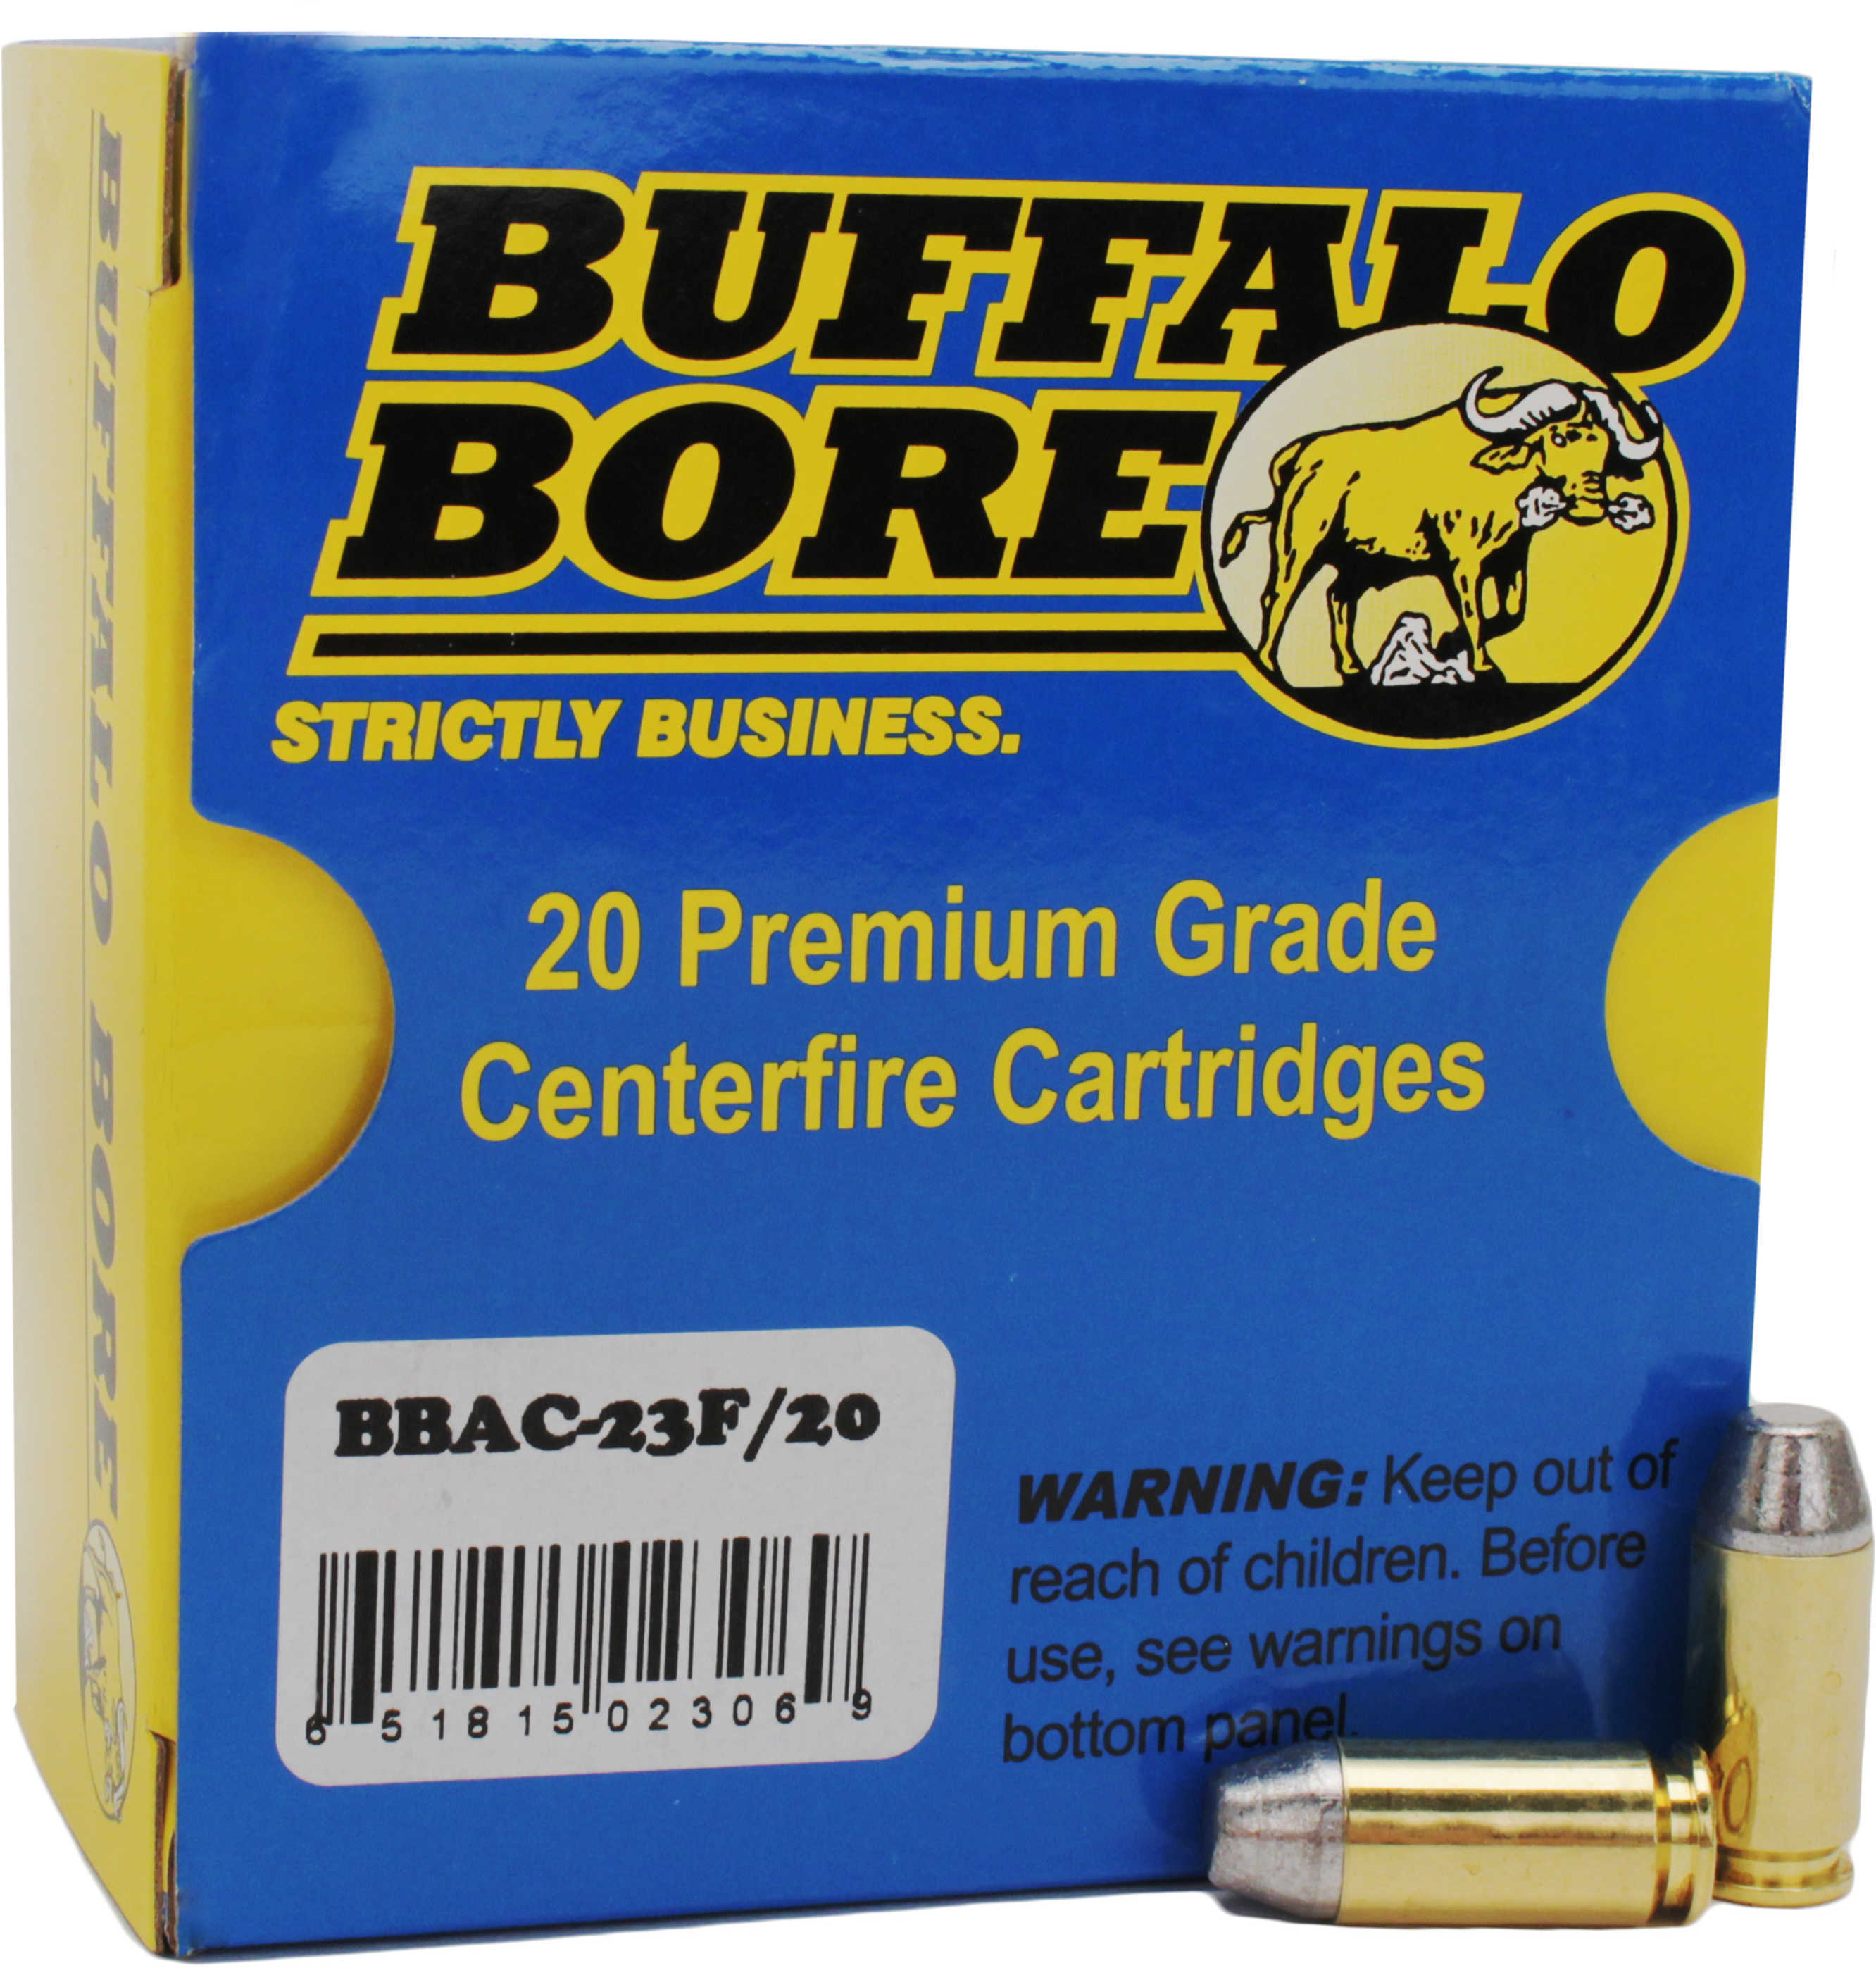 40 S&W 200 Grain Lead Rounds Buffalo Bore Ammunition